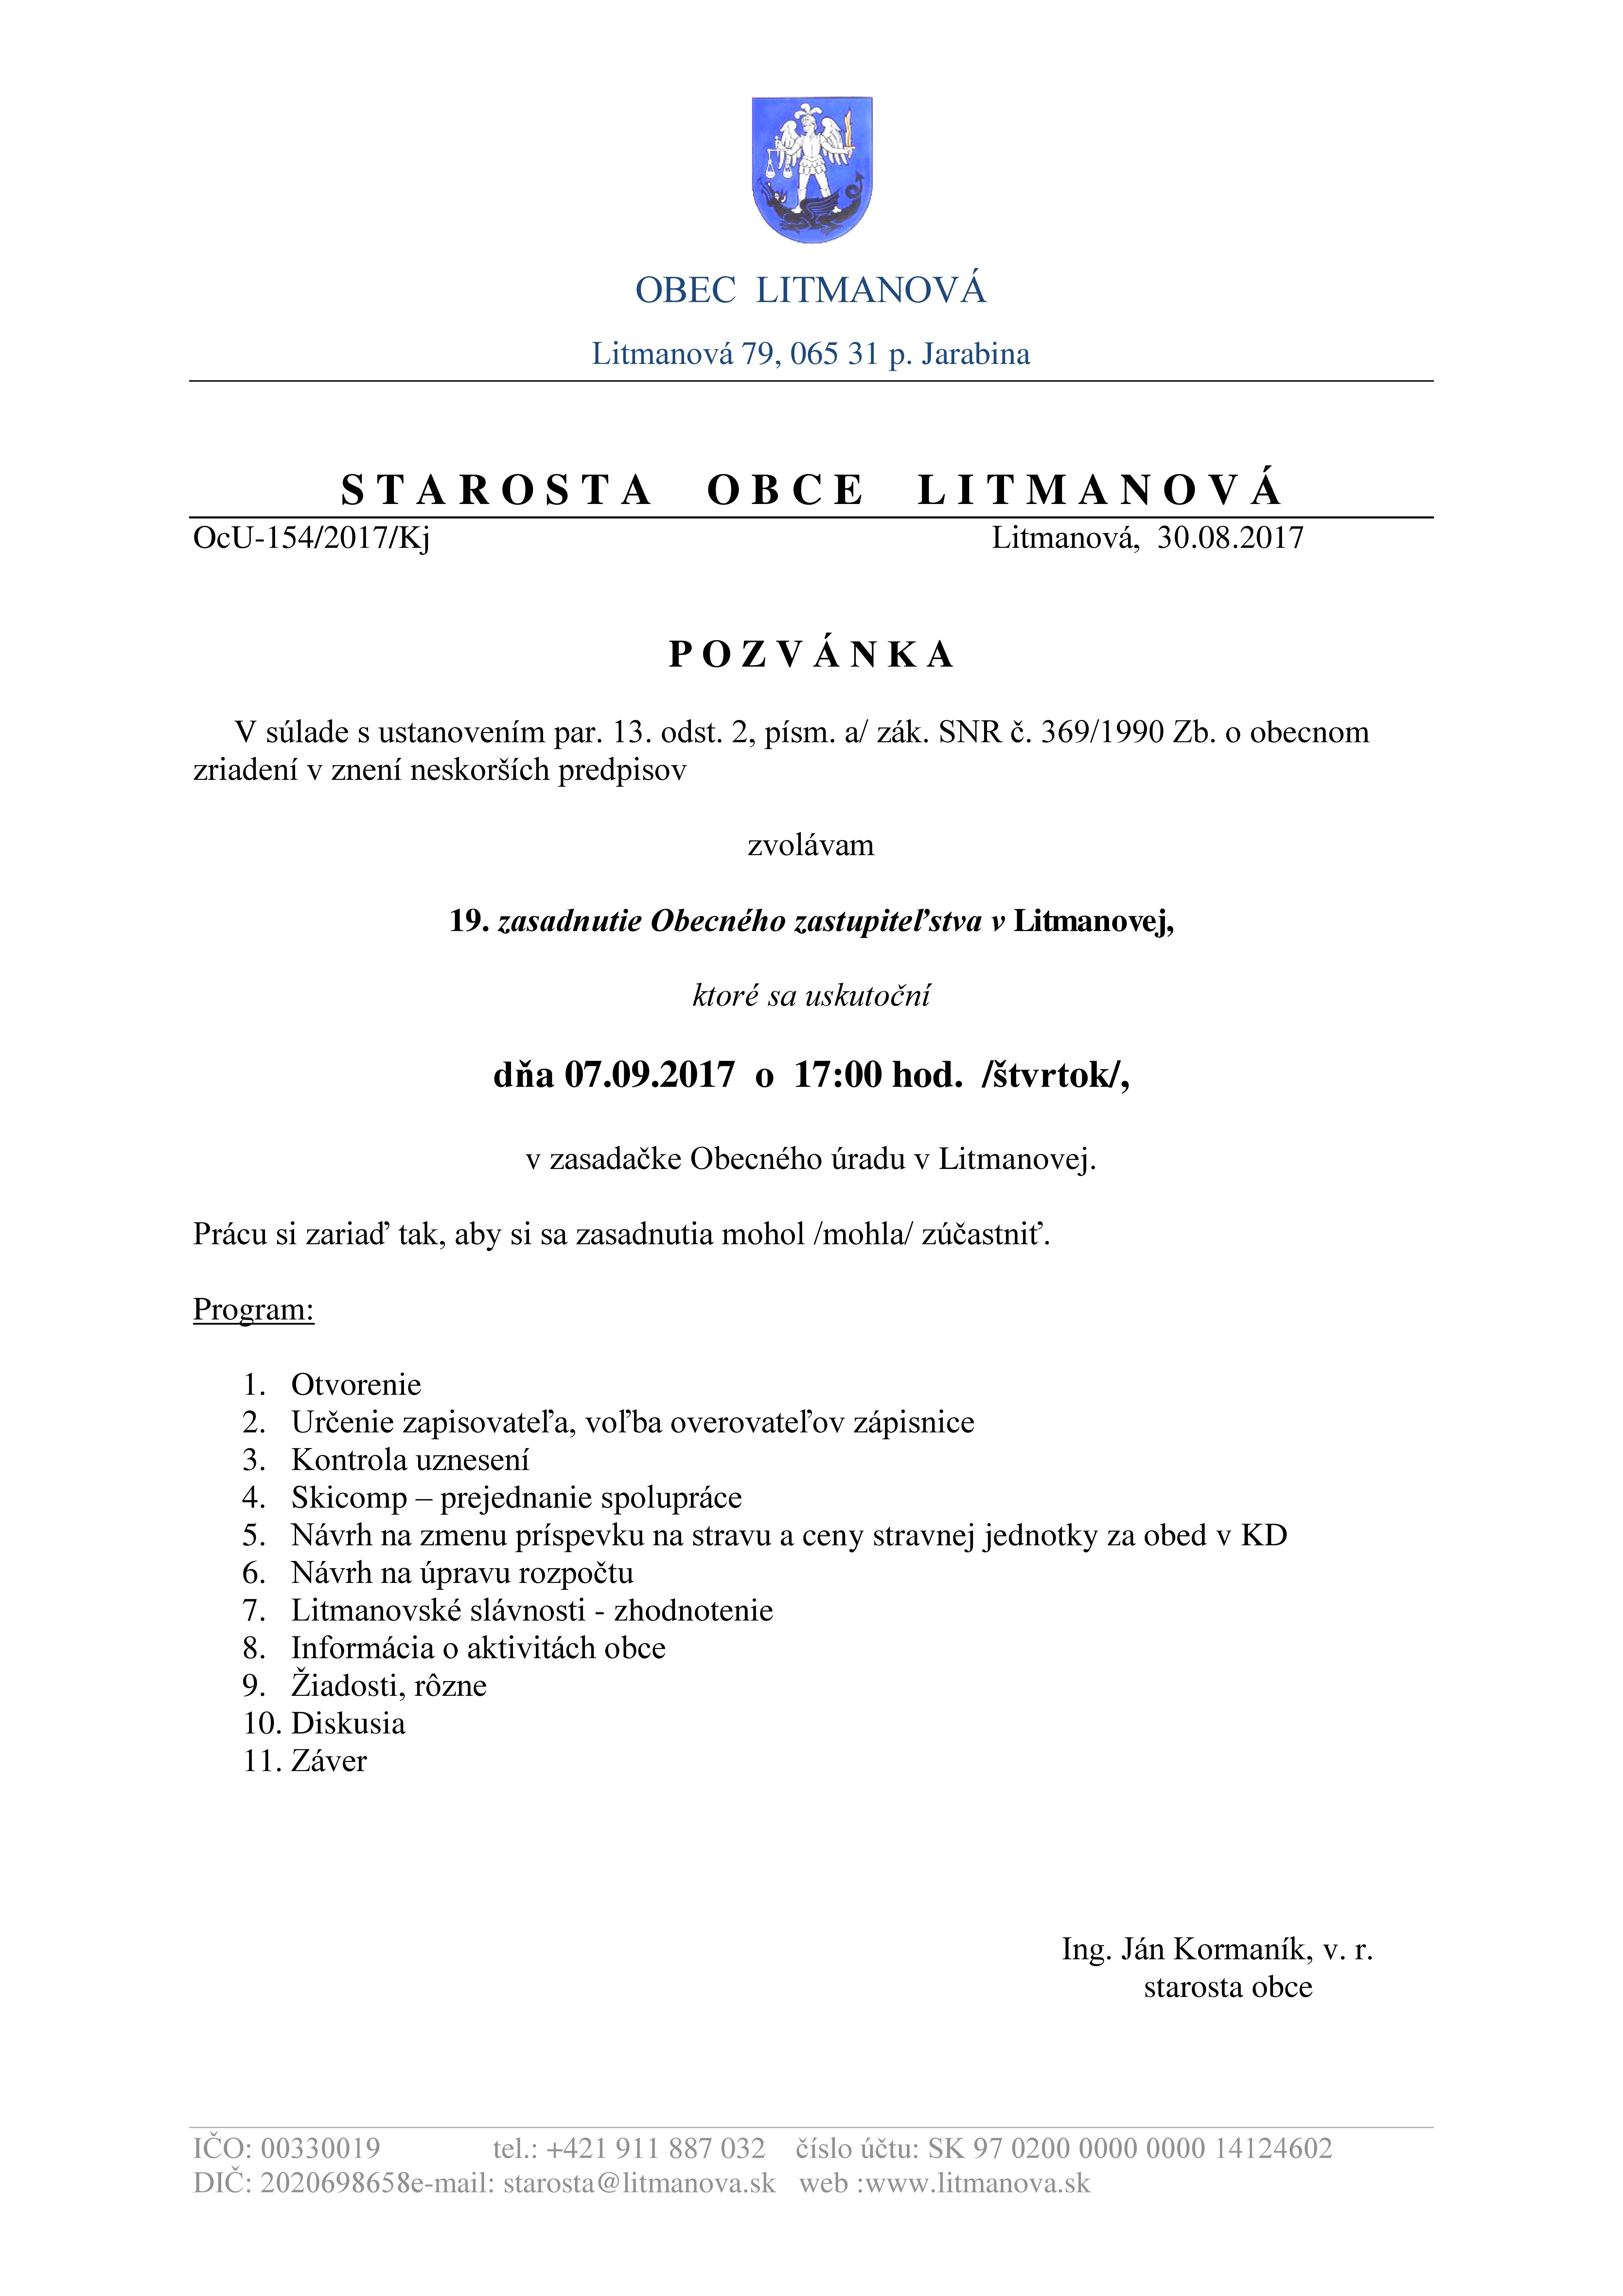 http://www.litmanova.sk/sk/rse/img.php?class=img&id=1930